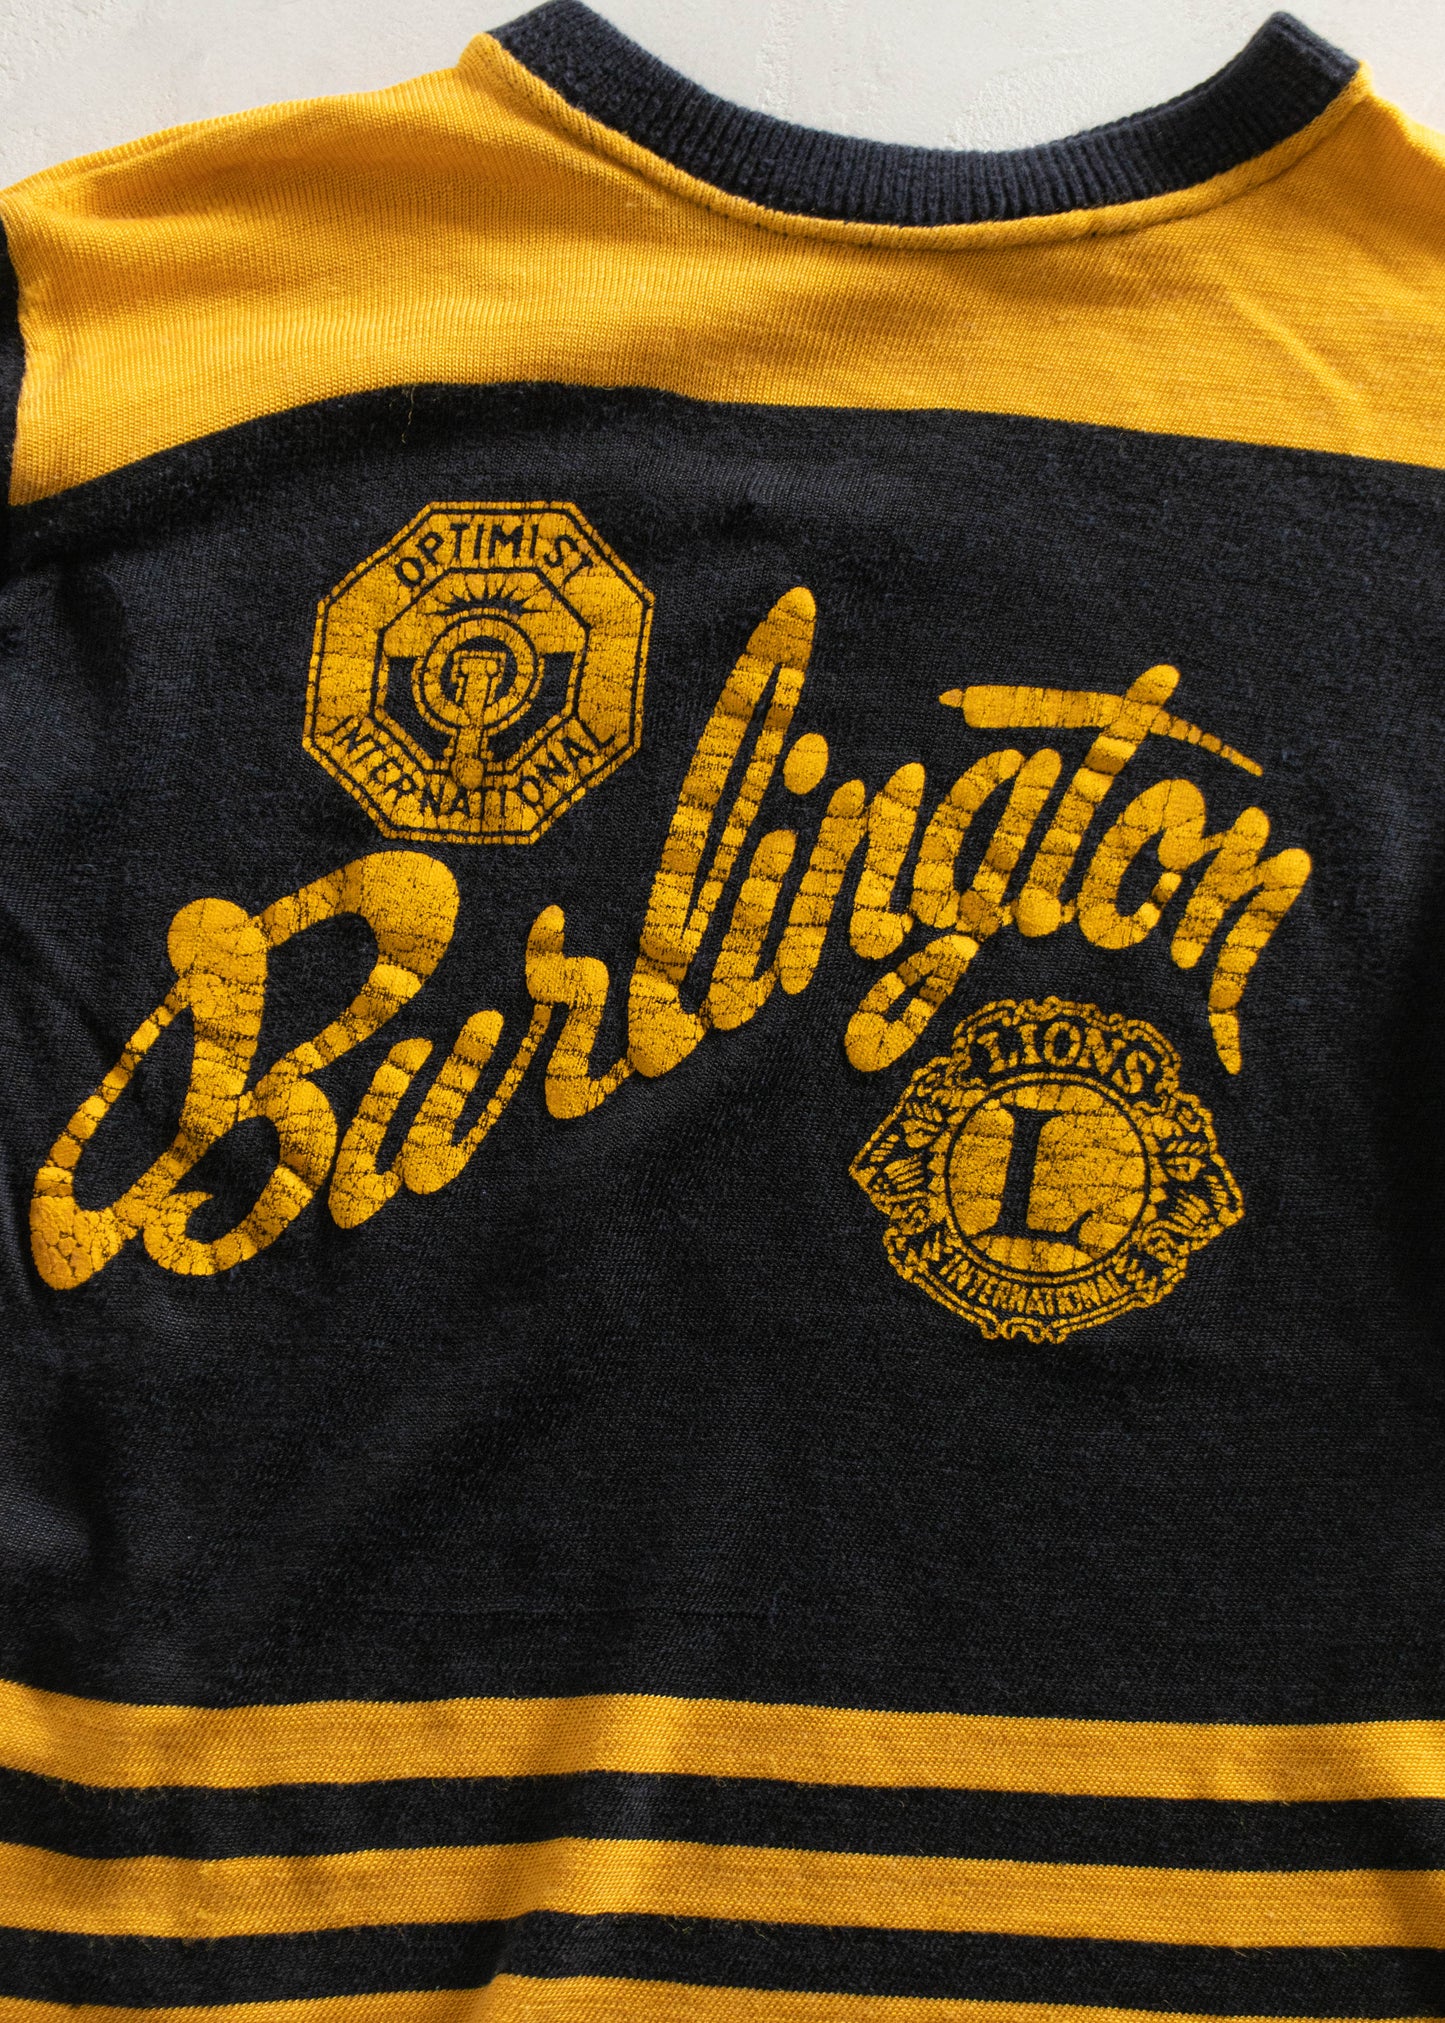 1980s Burlington Optimist International Long Sleeve Sport Jersey Size XS/S